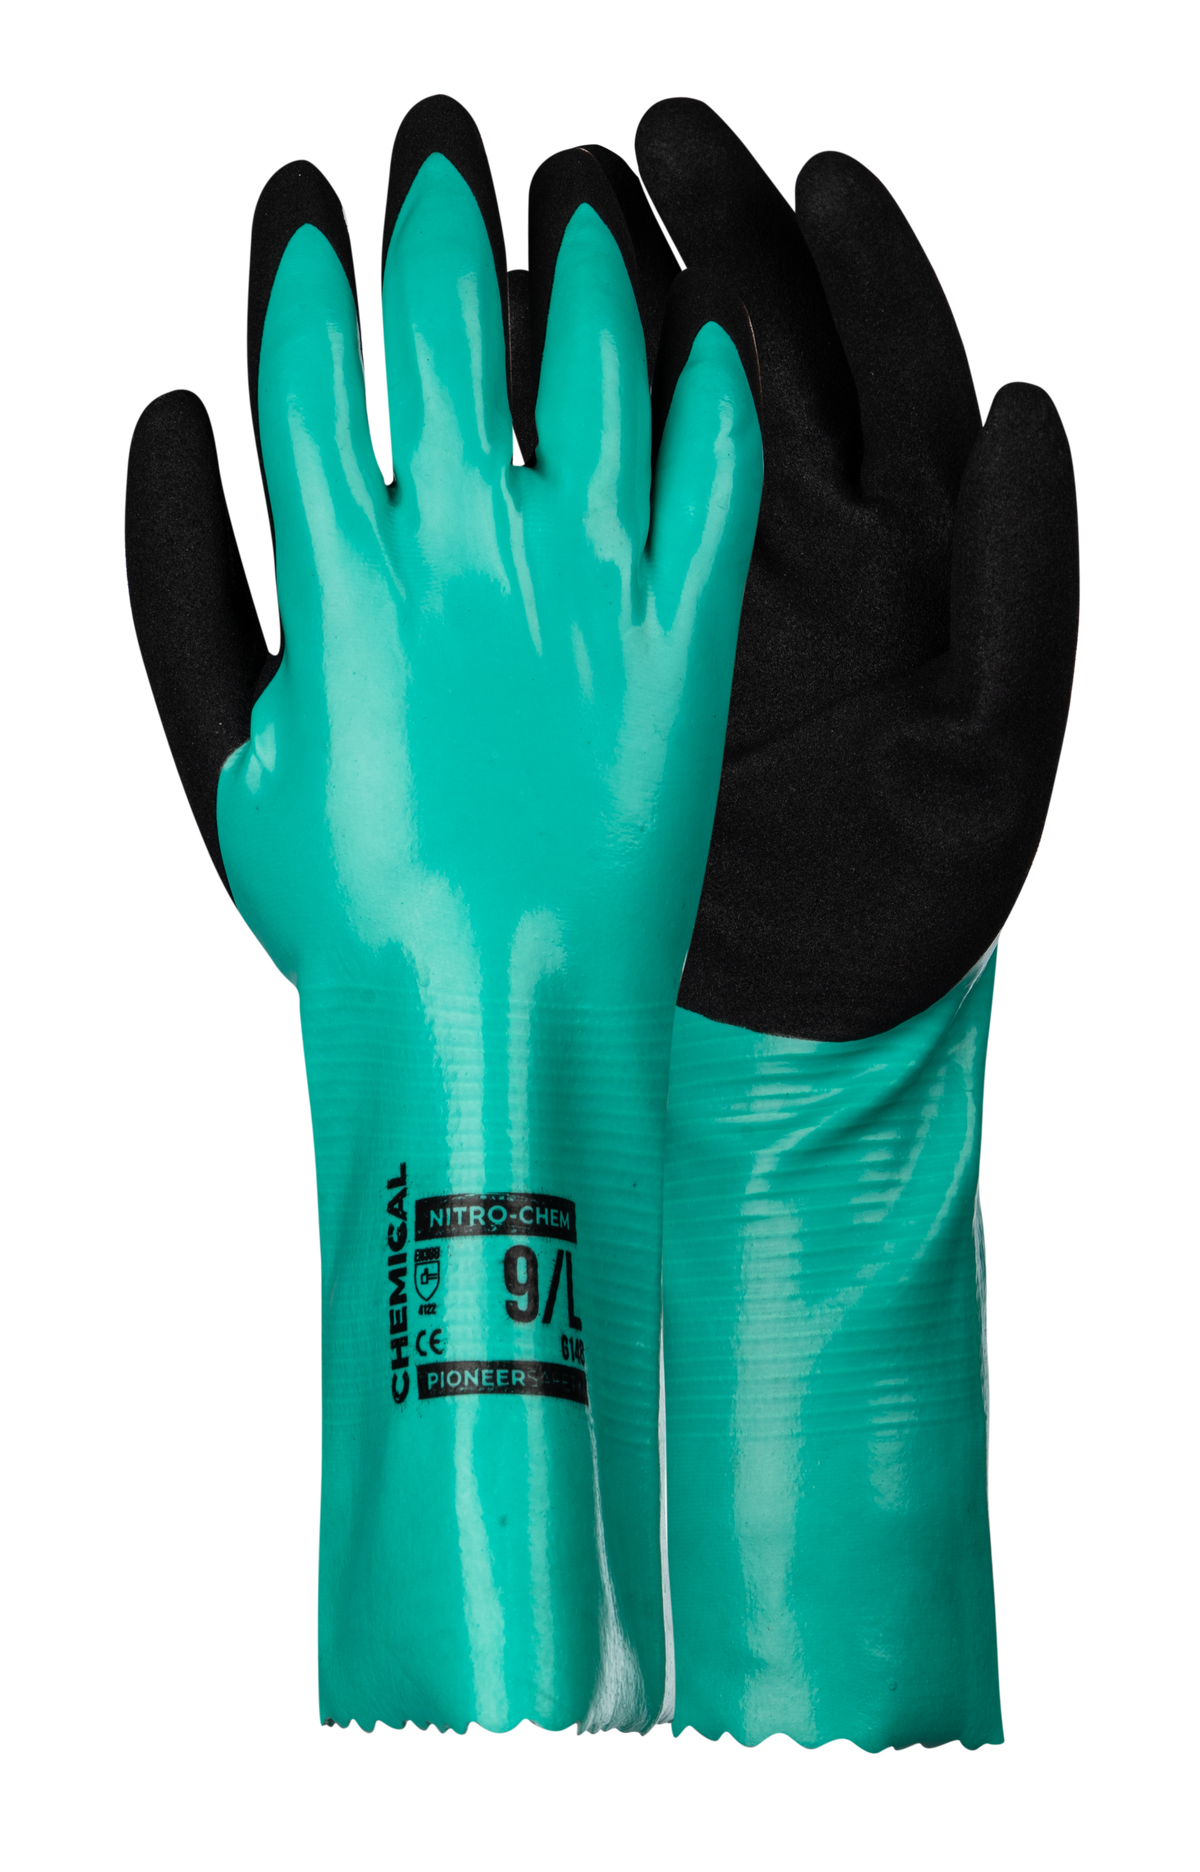 Nito-chem Glove